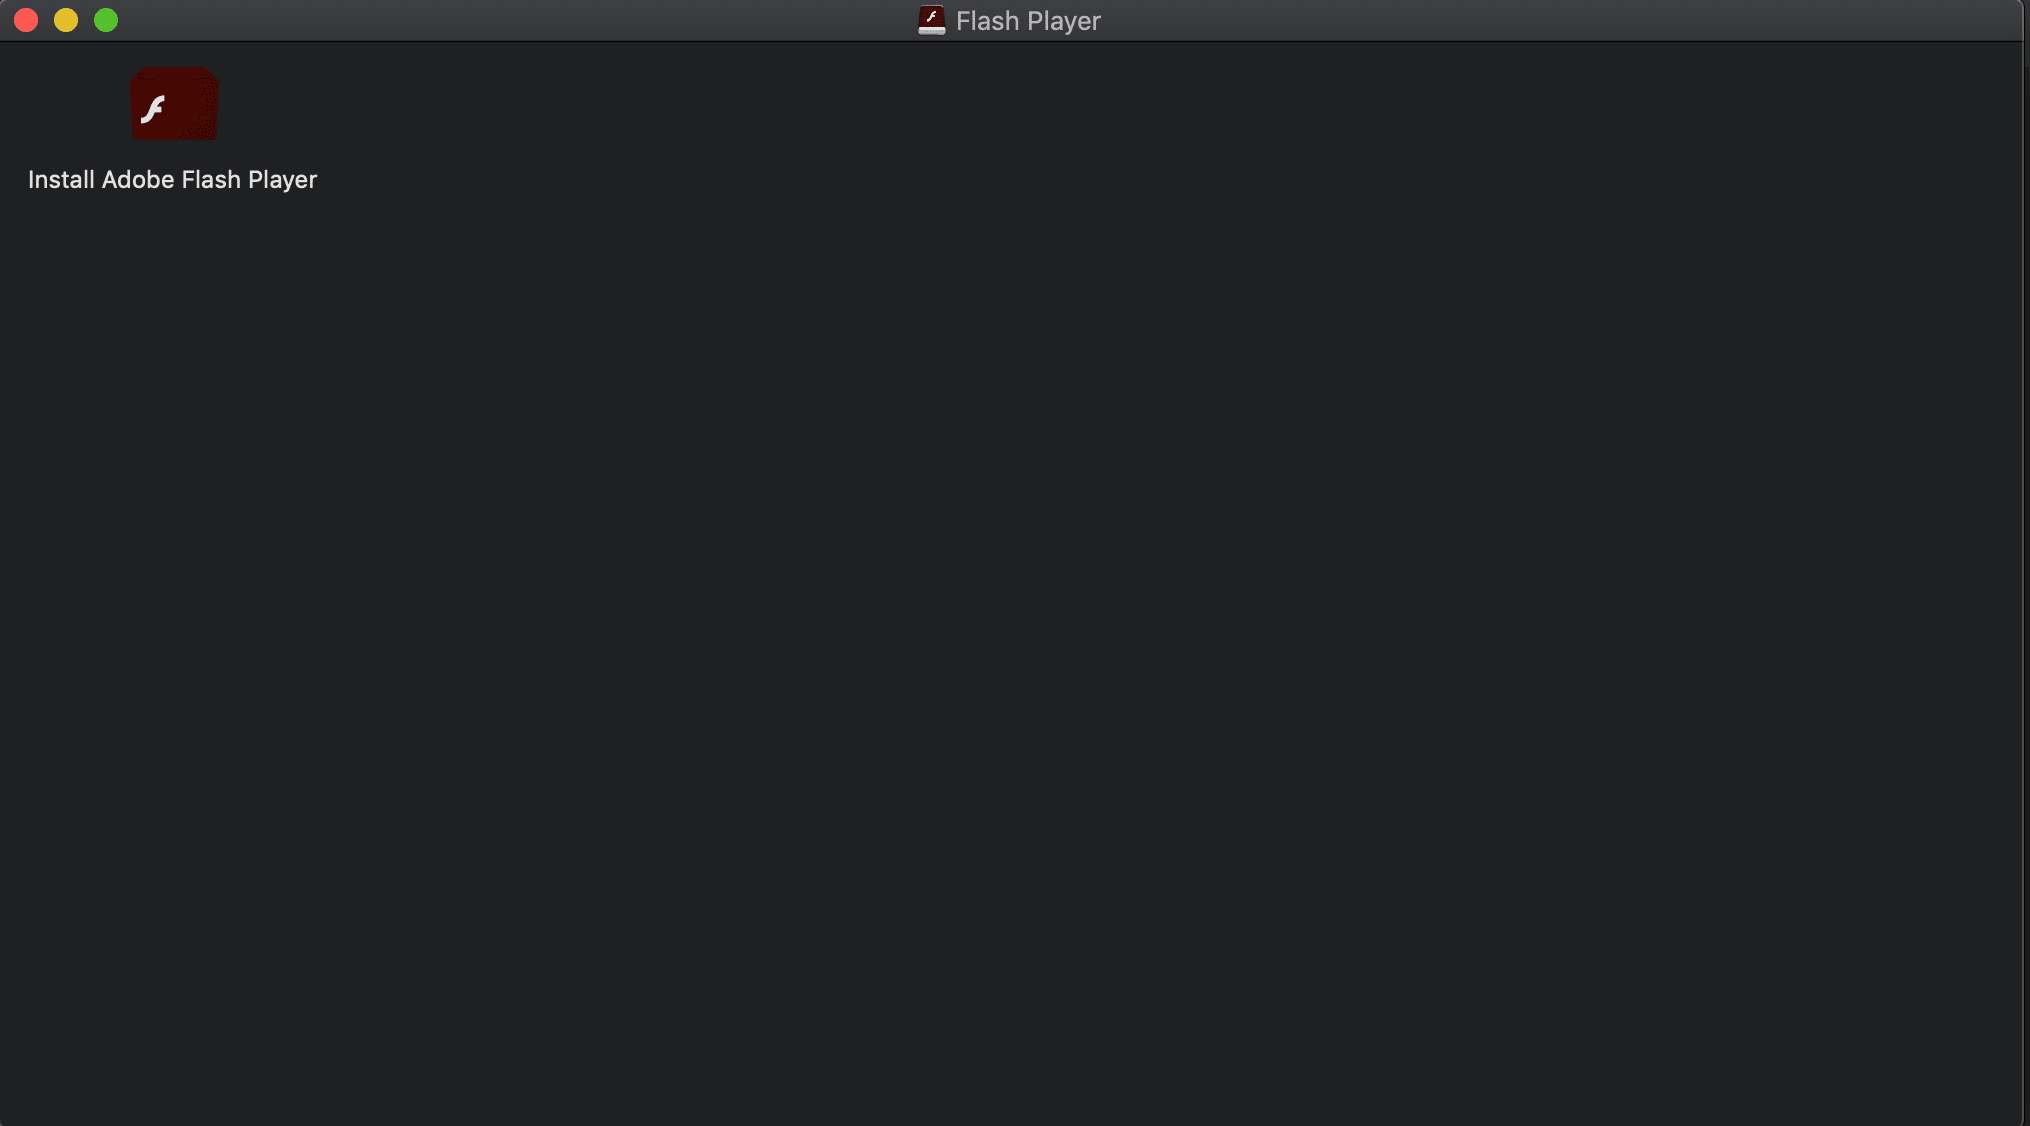 снимок экрана установочного файла Adobe Flash Player для Mac